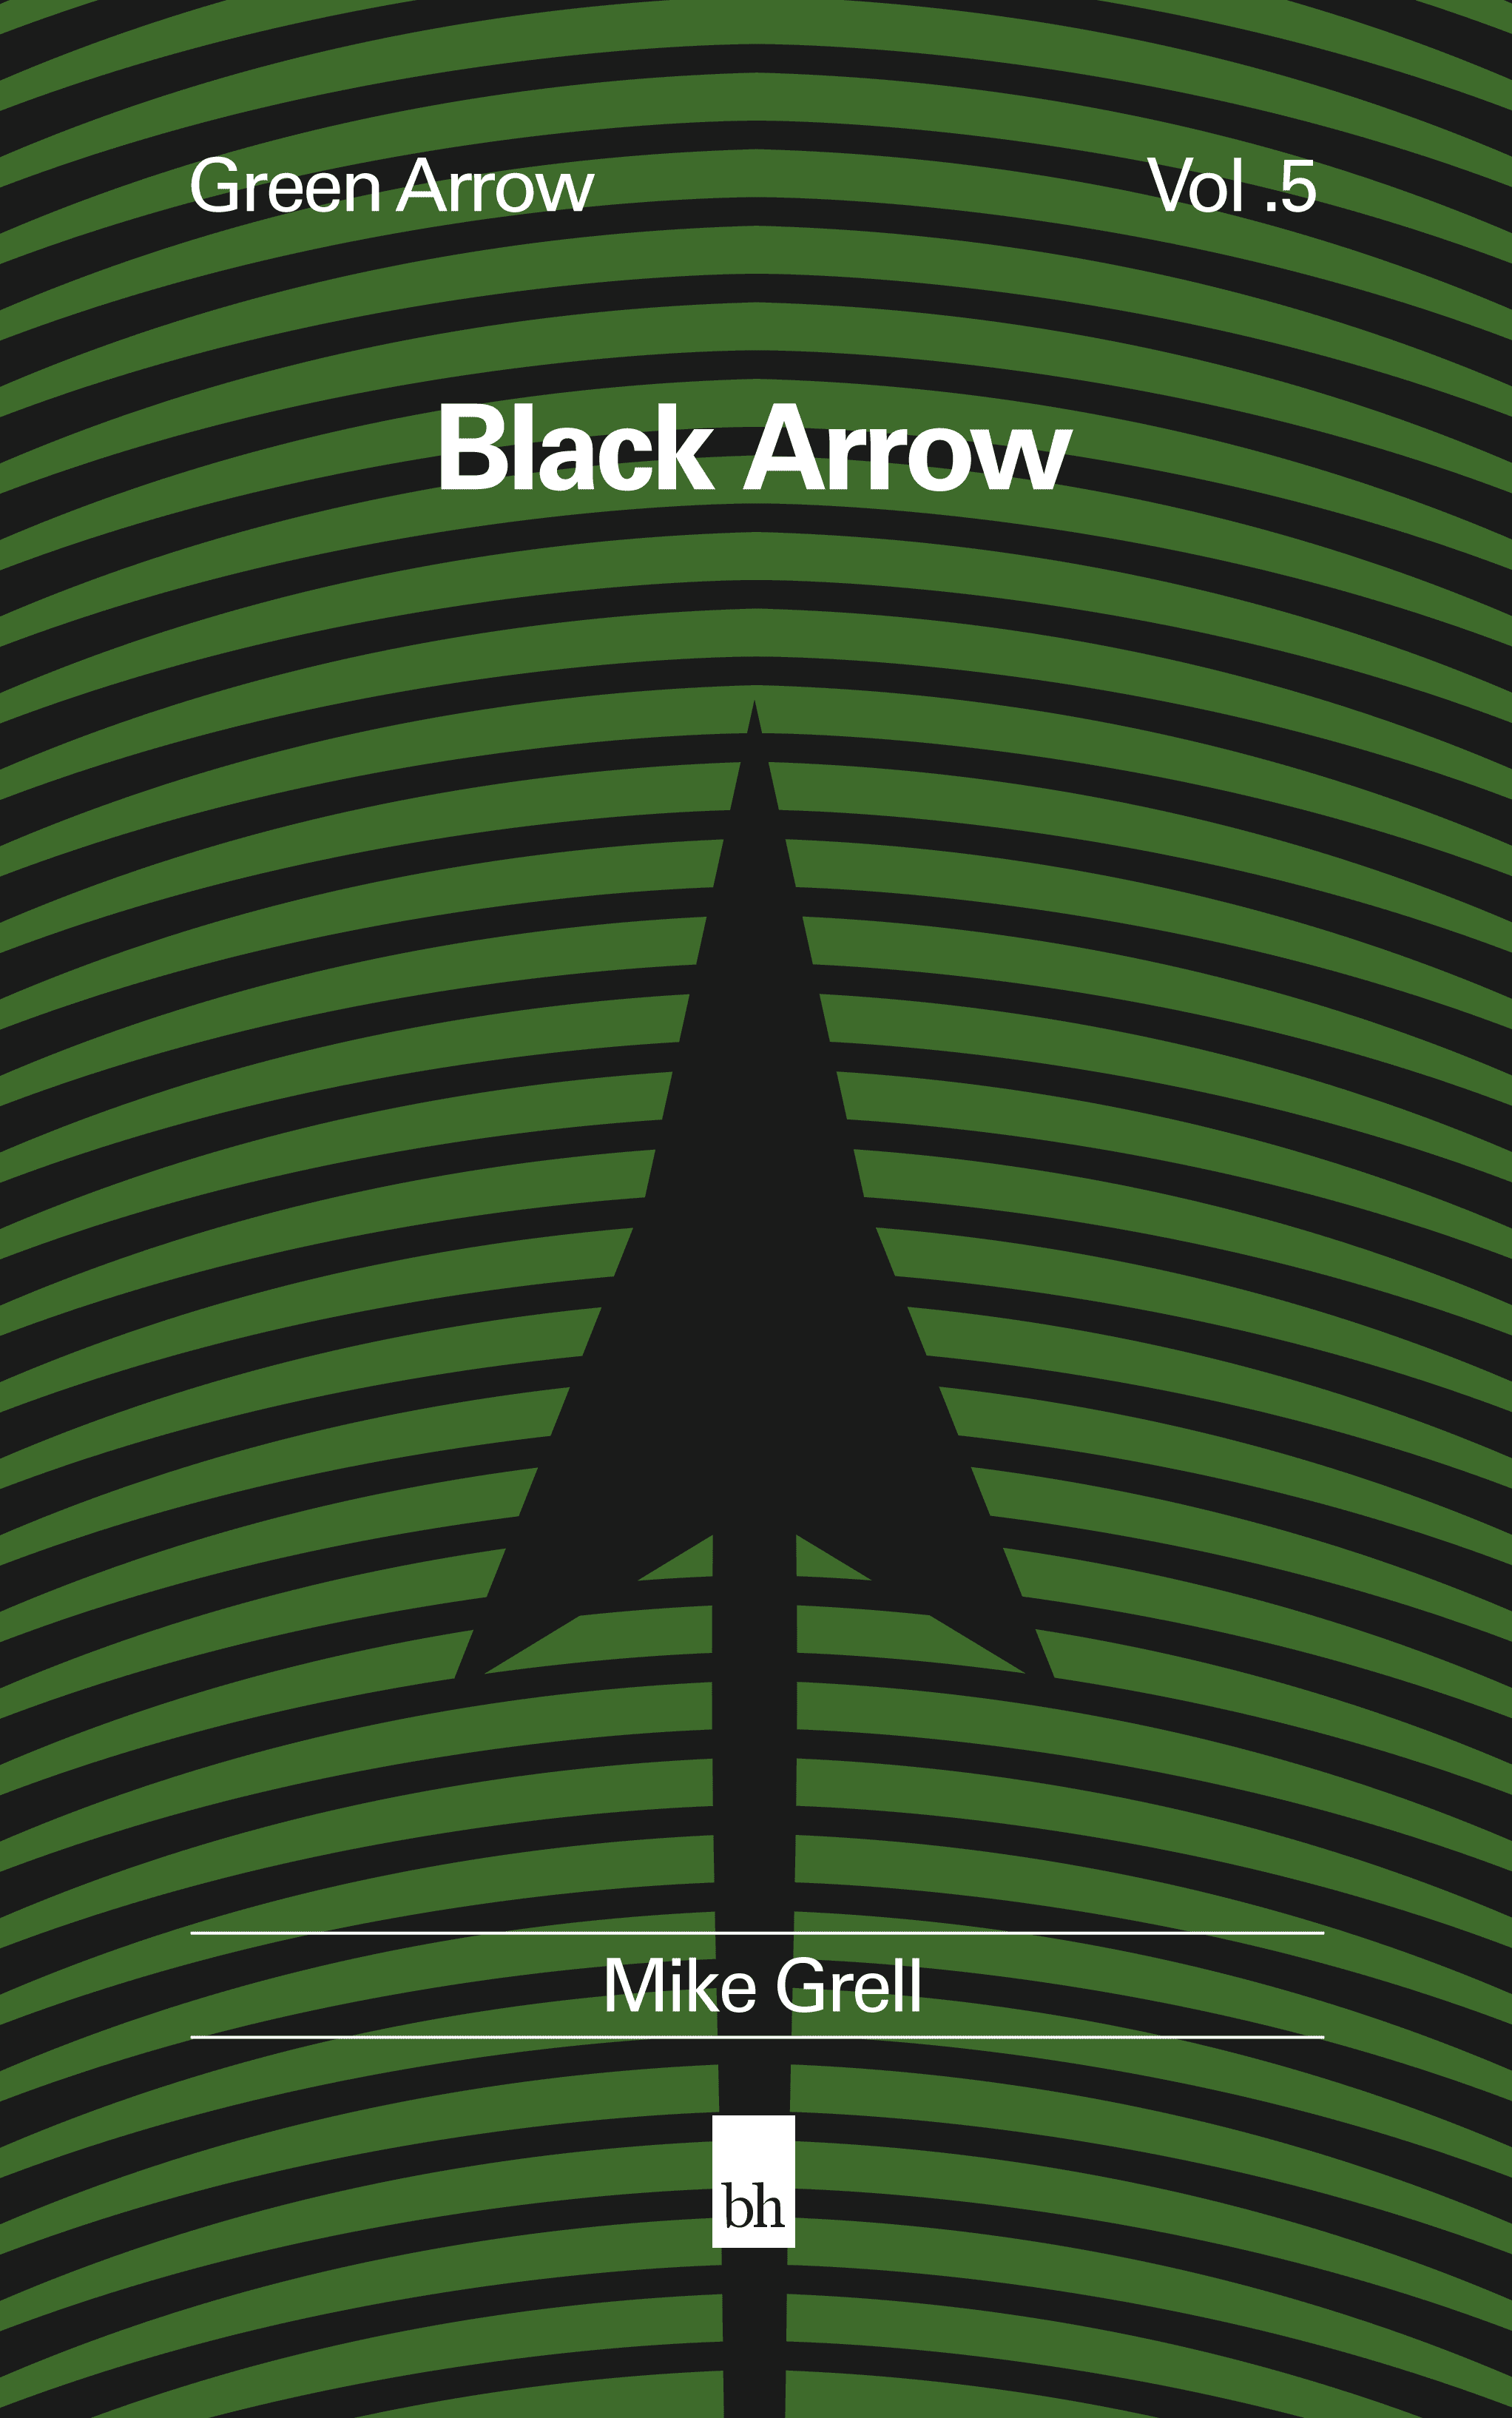 Green Arrow Vol. 5: Black Arrow by Mike Grell